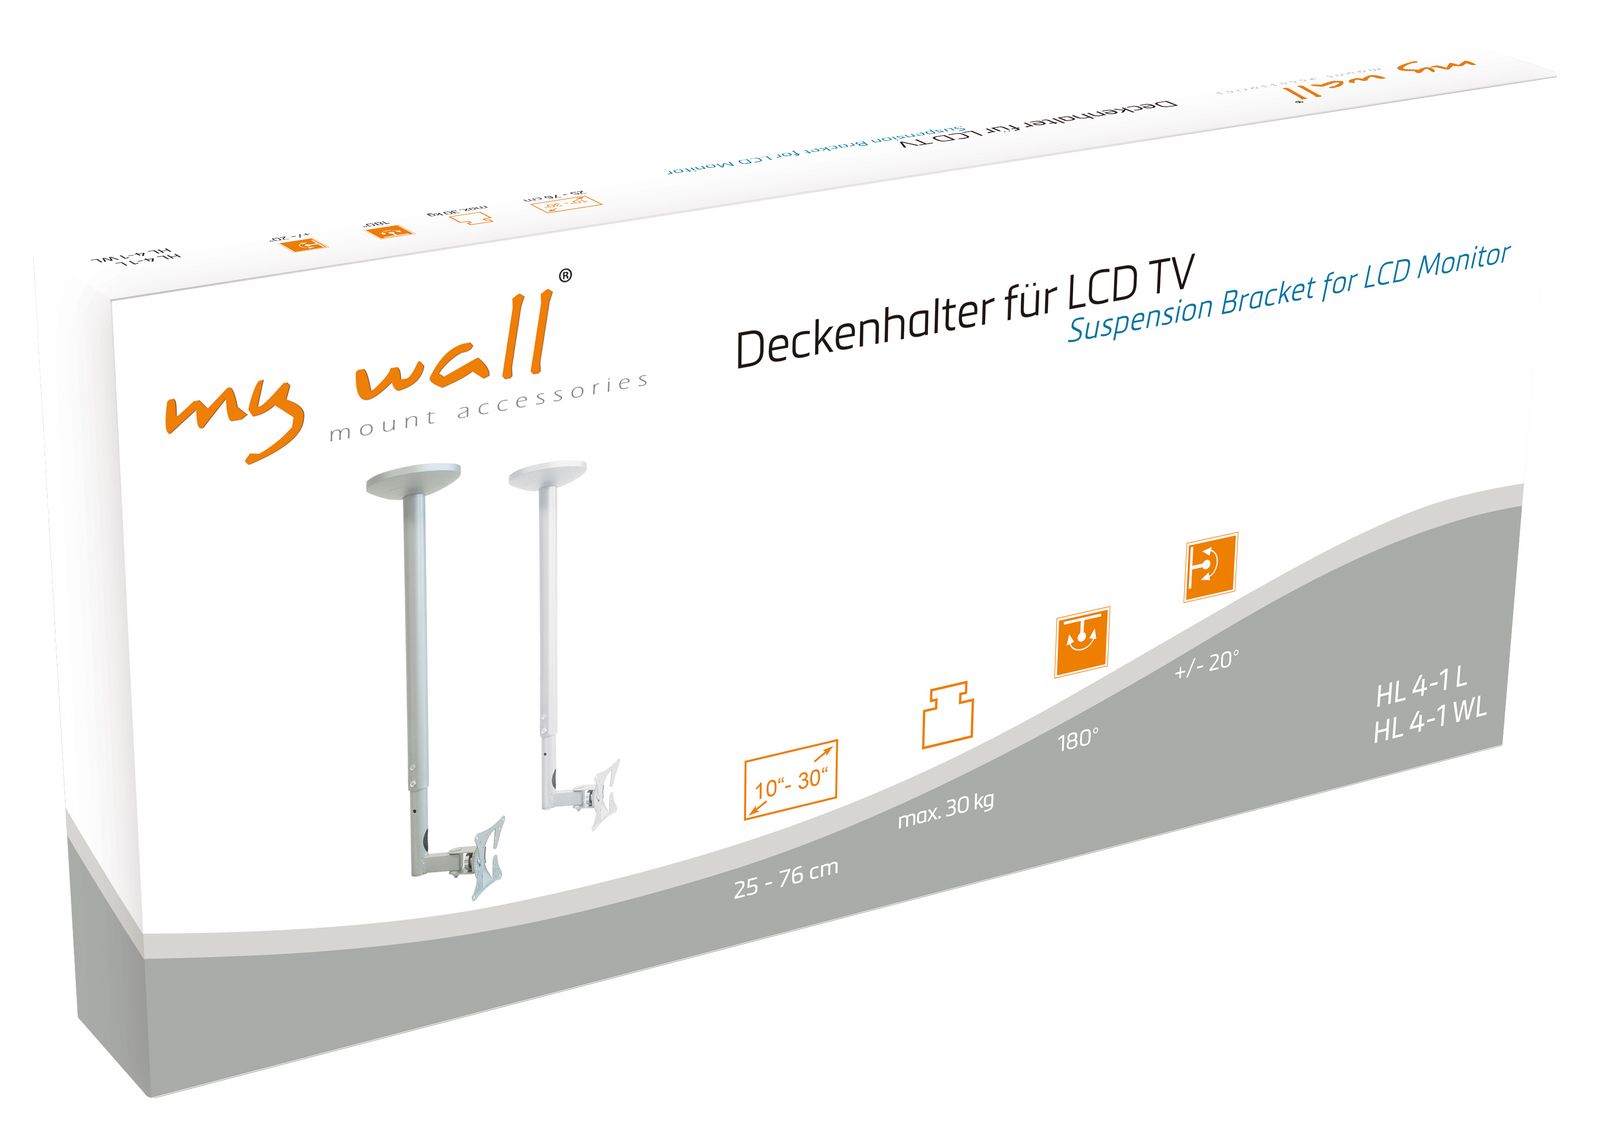 Deckenhalter für LCD TV My Wall HL4-1W-/bilder/big/HL4-1_HL4-1WL_Karton_72dpi.jpg